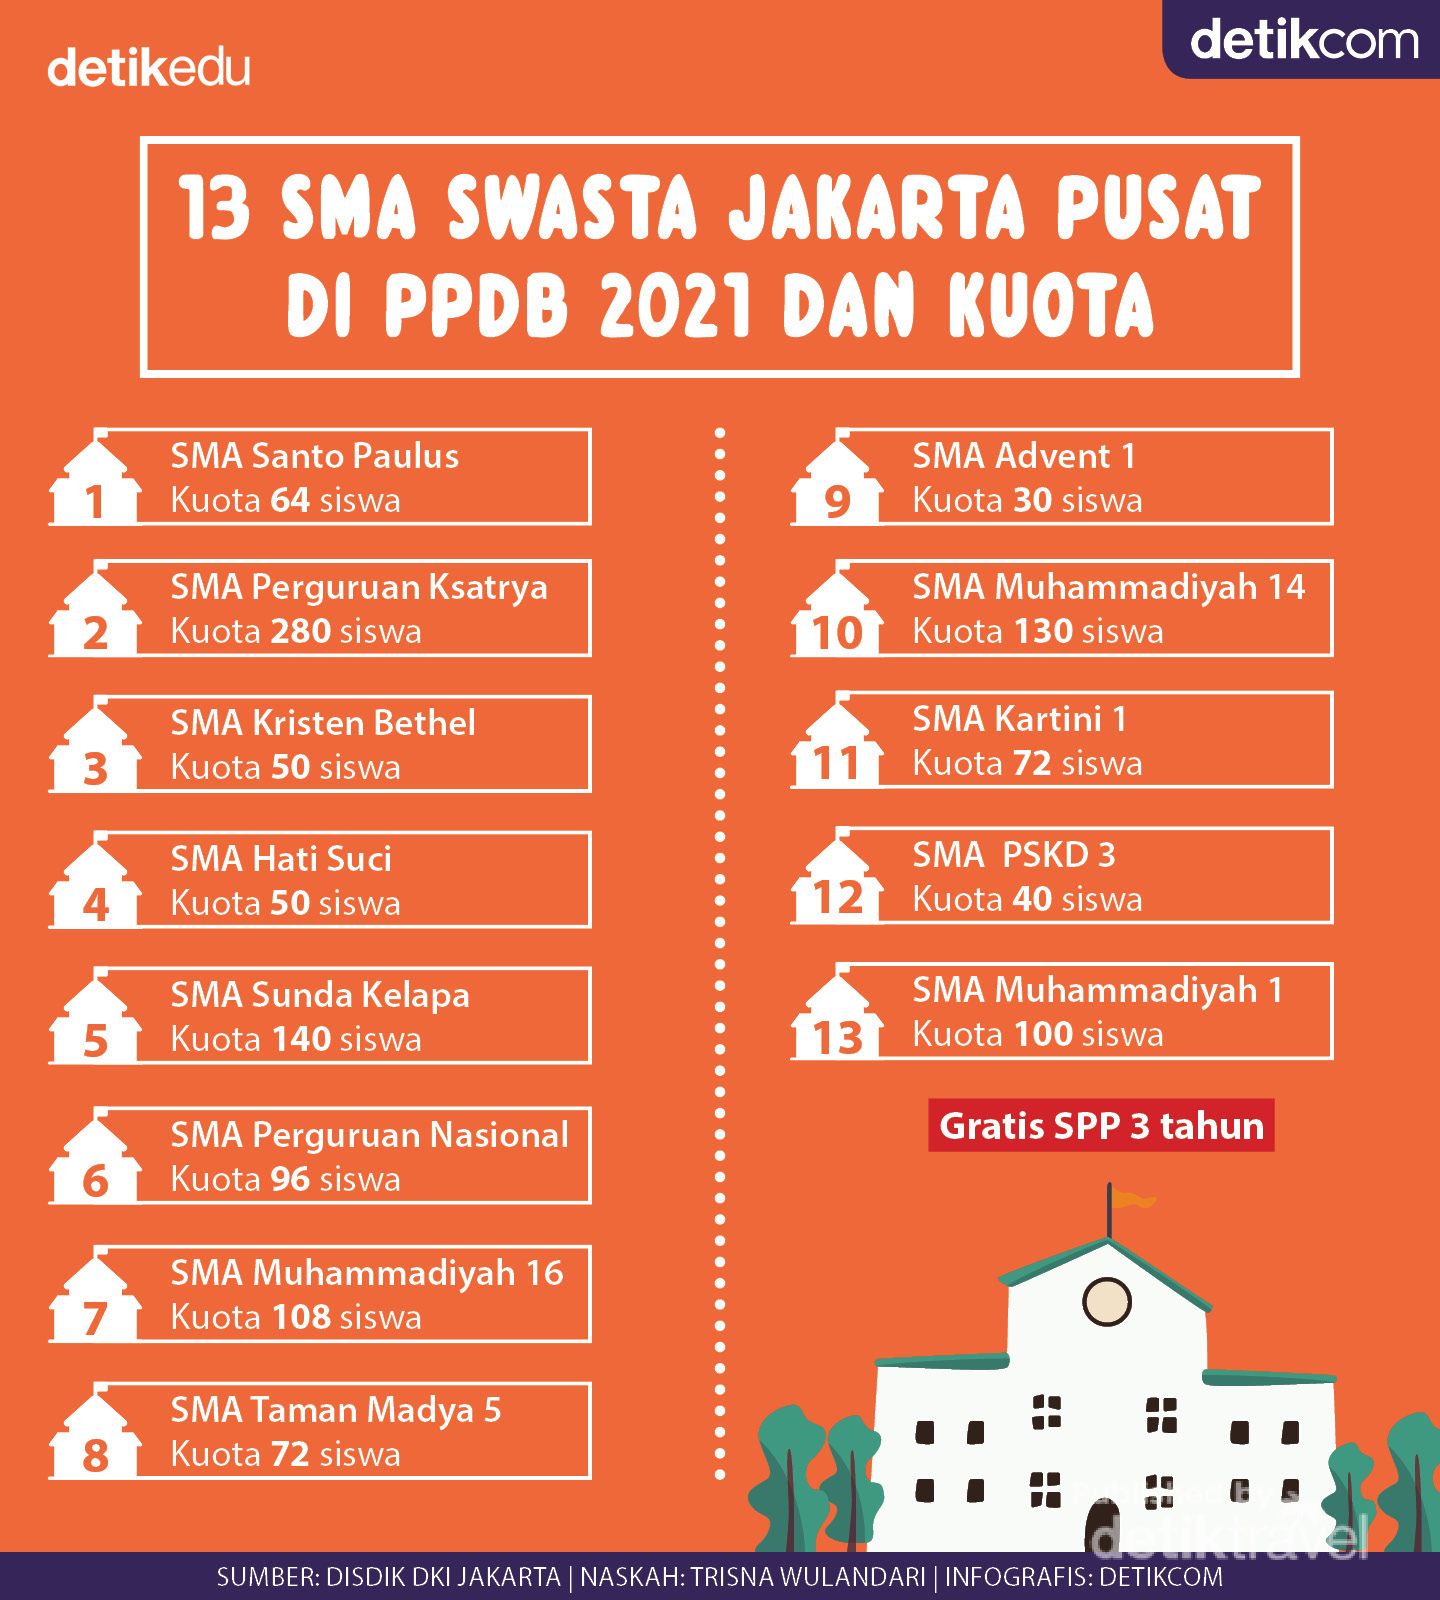 SMA Swasta di Jakarta Pusat yang masuk PPDB DKI 2021